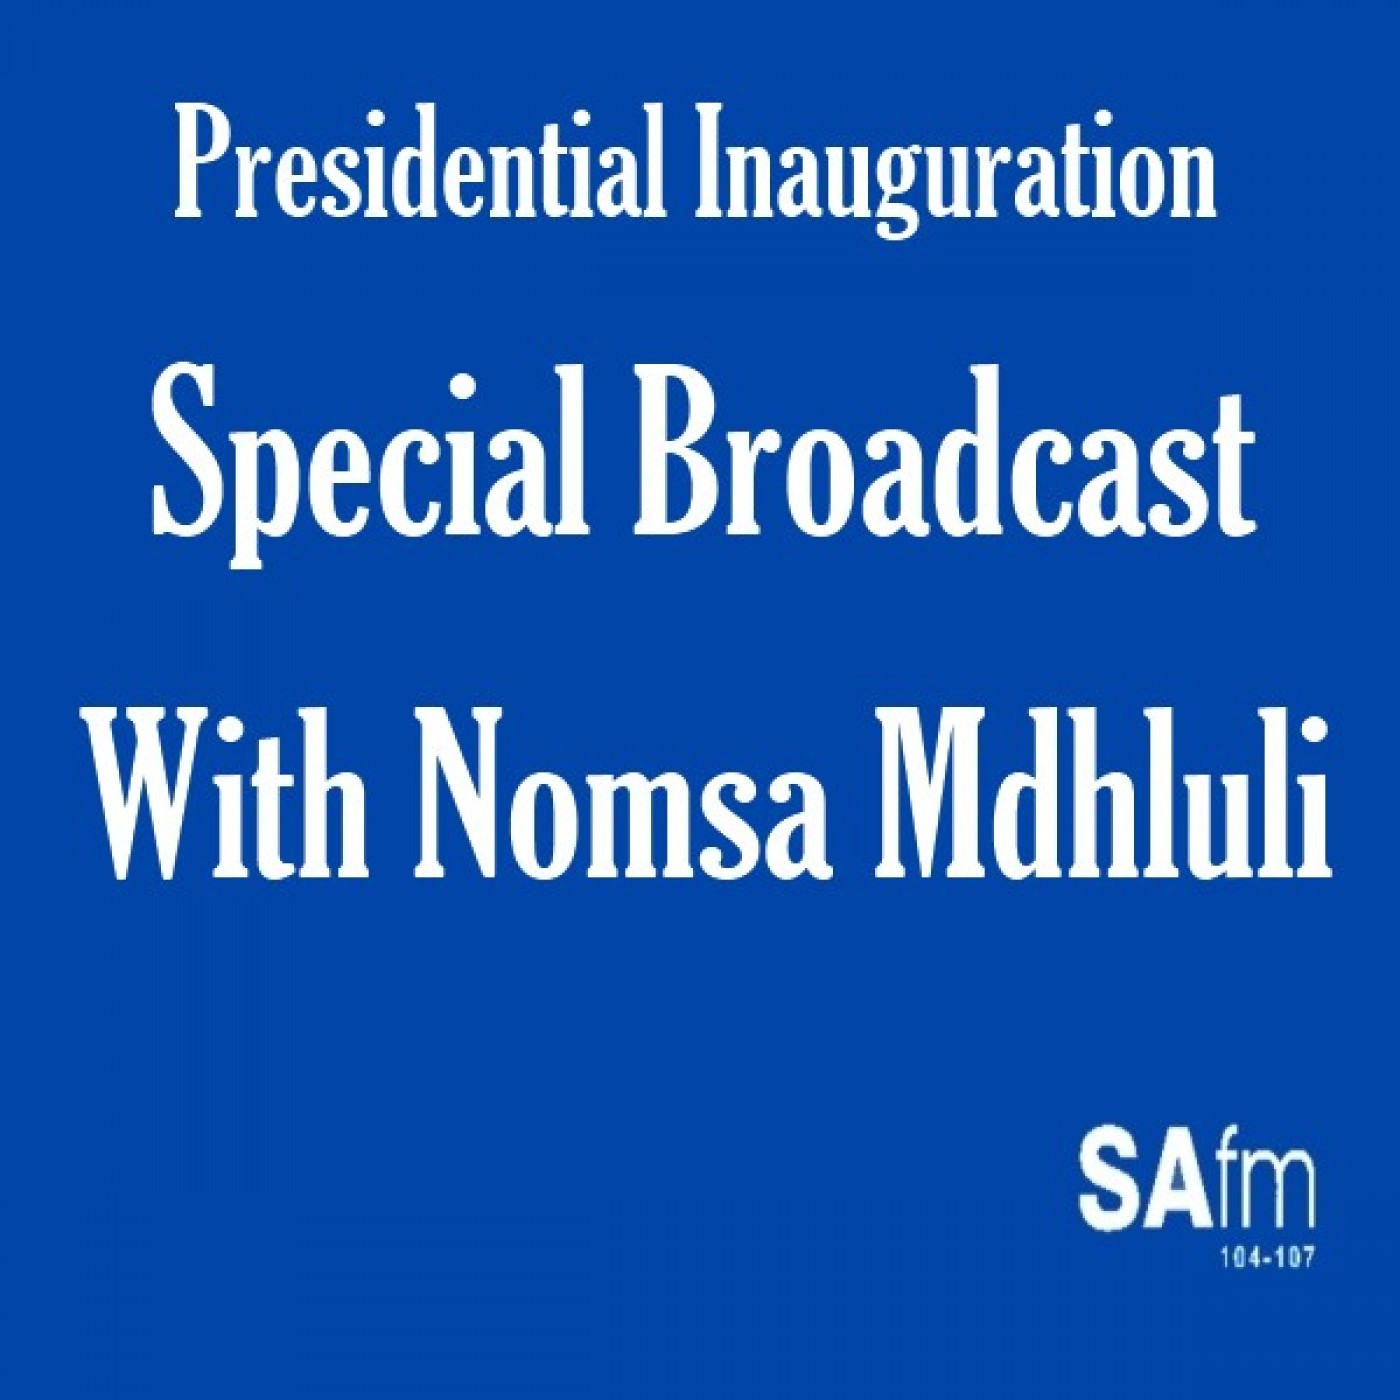 Political analysis on Ramaphosa’s speech